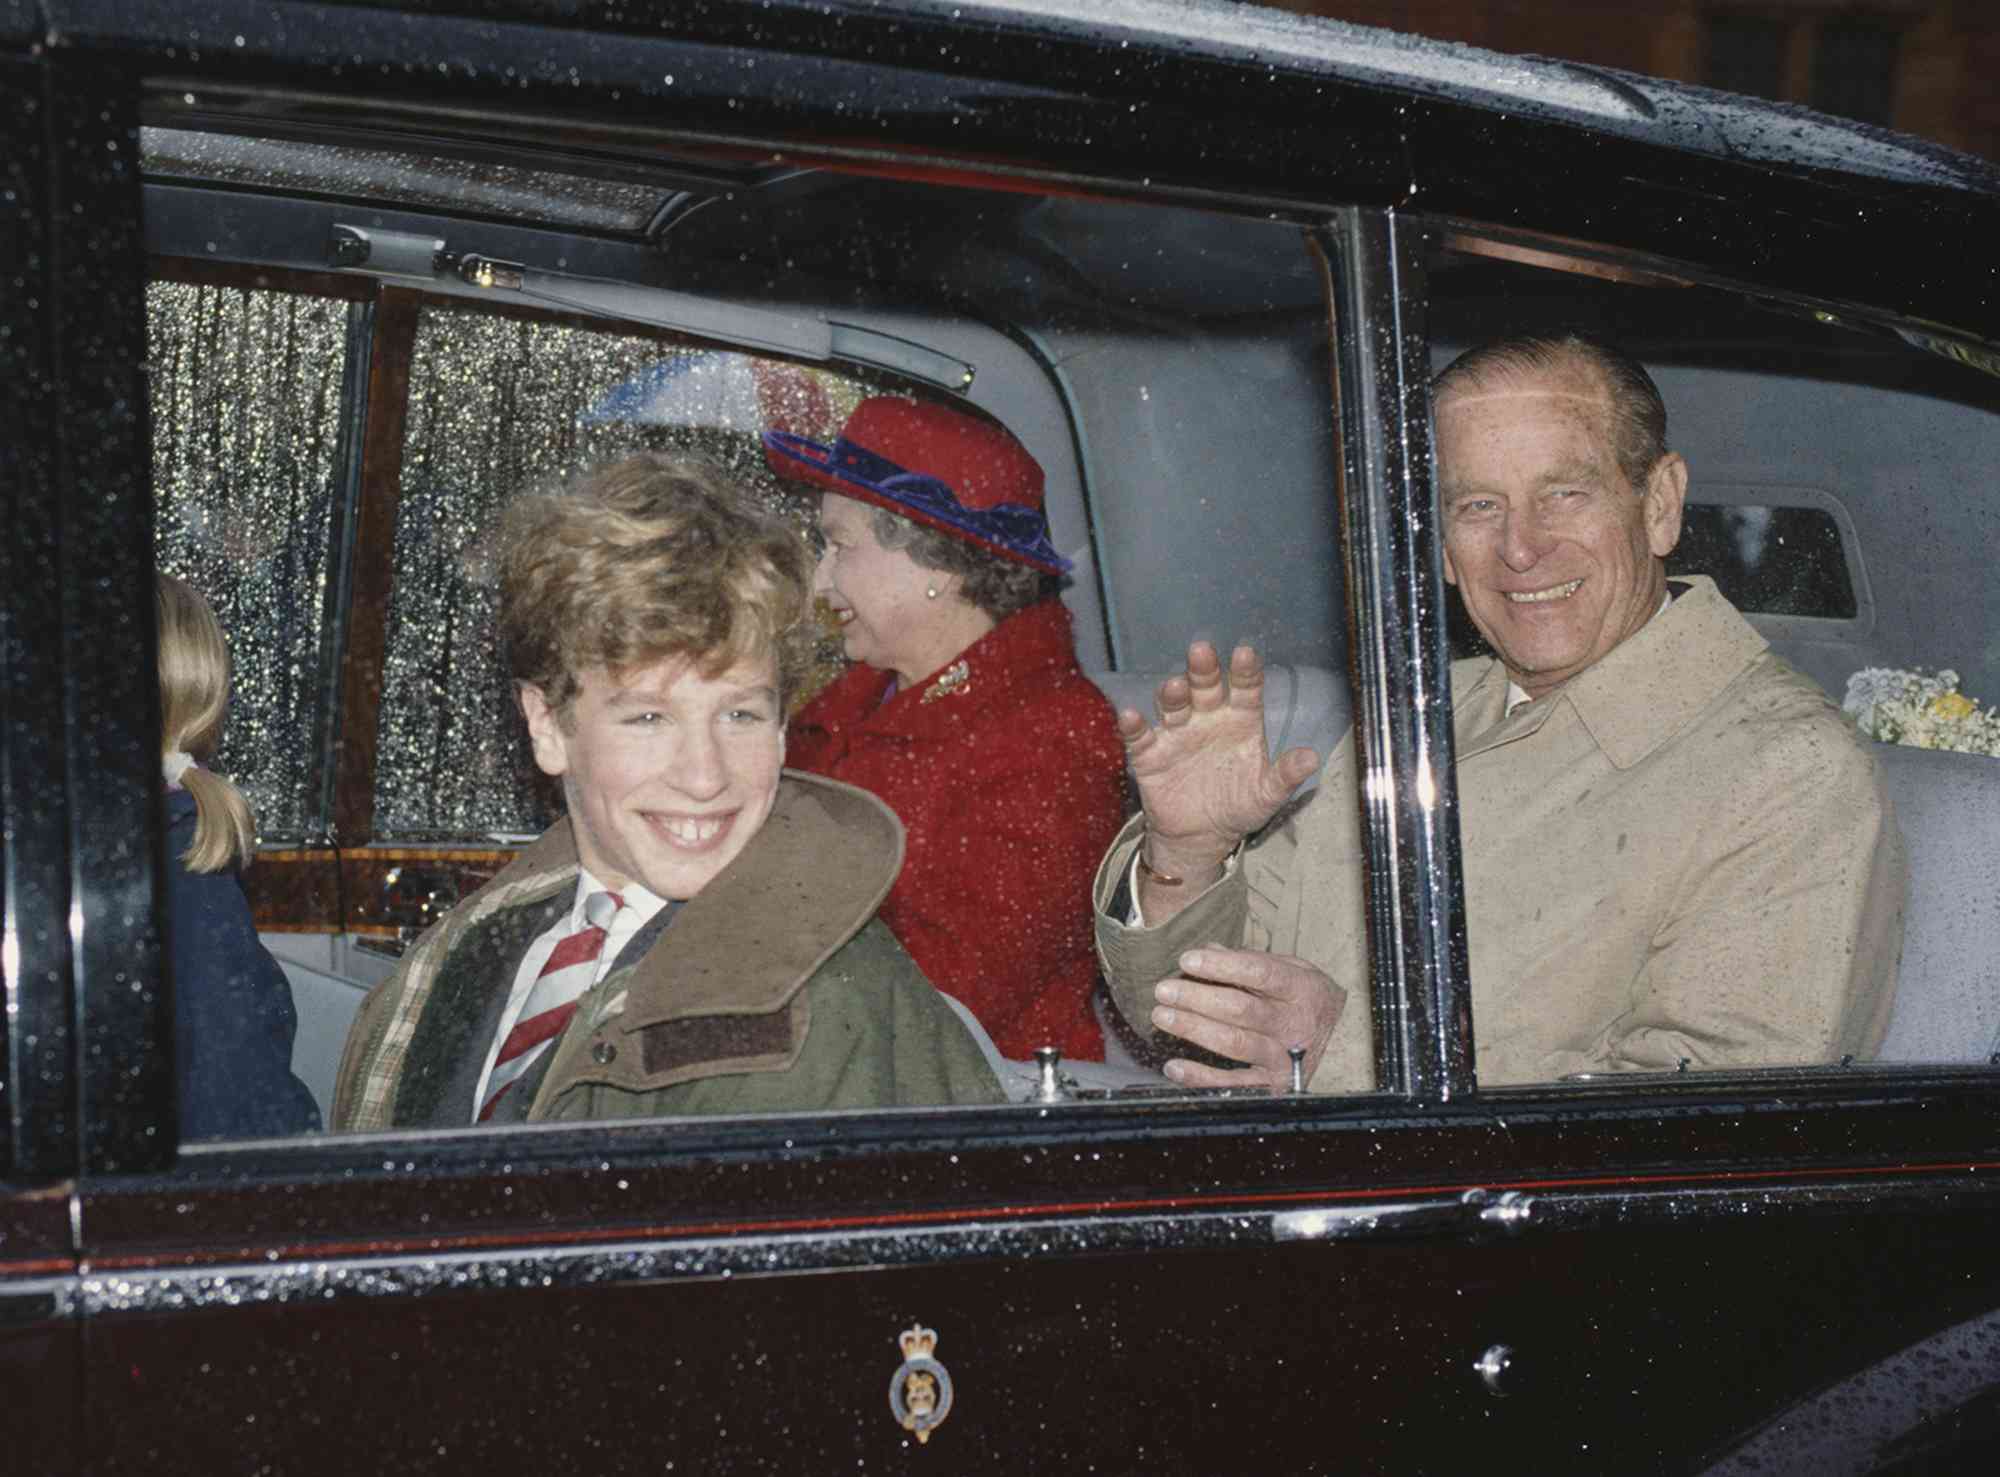 Queen Elizabeth II visits Port Regis School in Shaftesbury, Dorset, with her husband Prince Philip and their grandson Peter Phillips